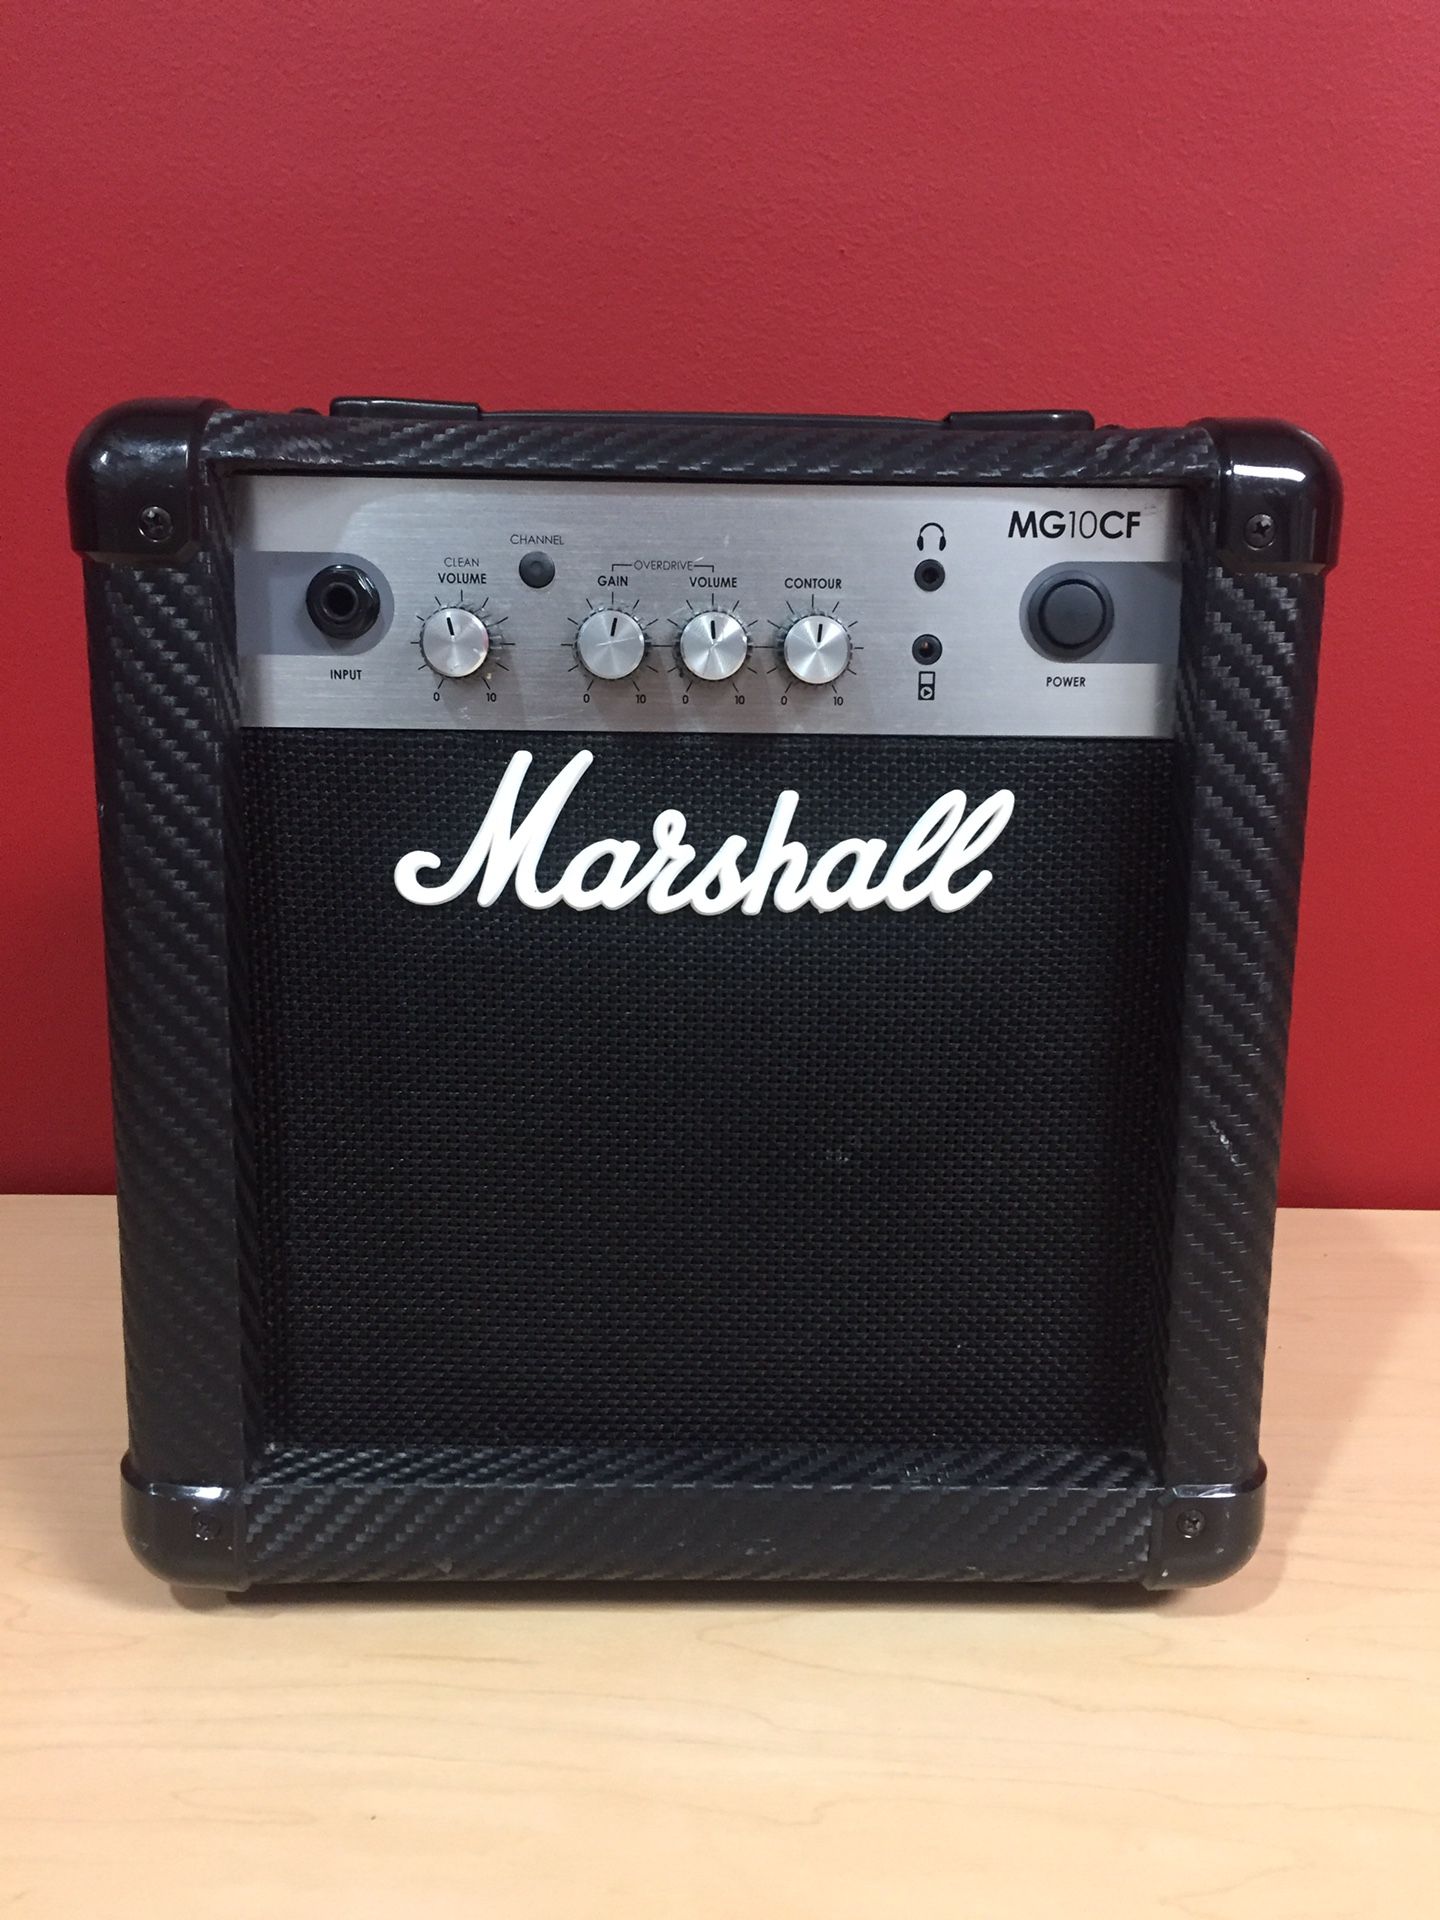 Marshall Guitar / Bass Amplifier MG10CF $45